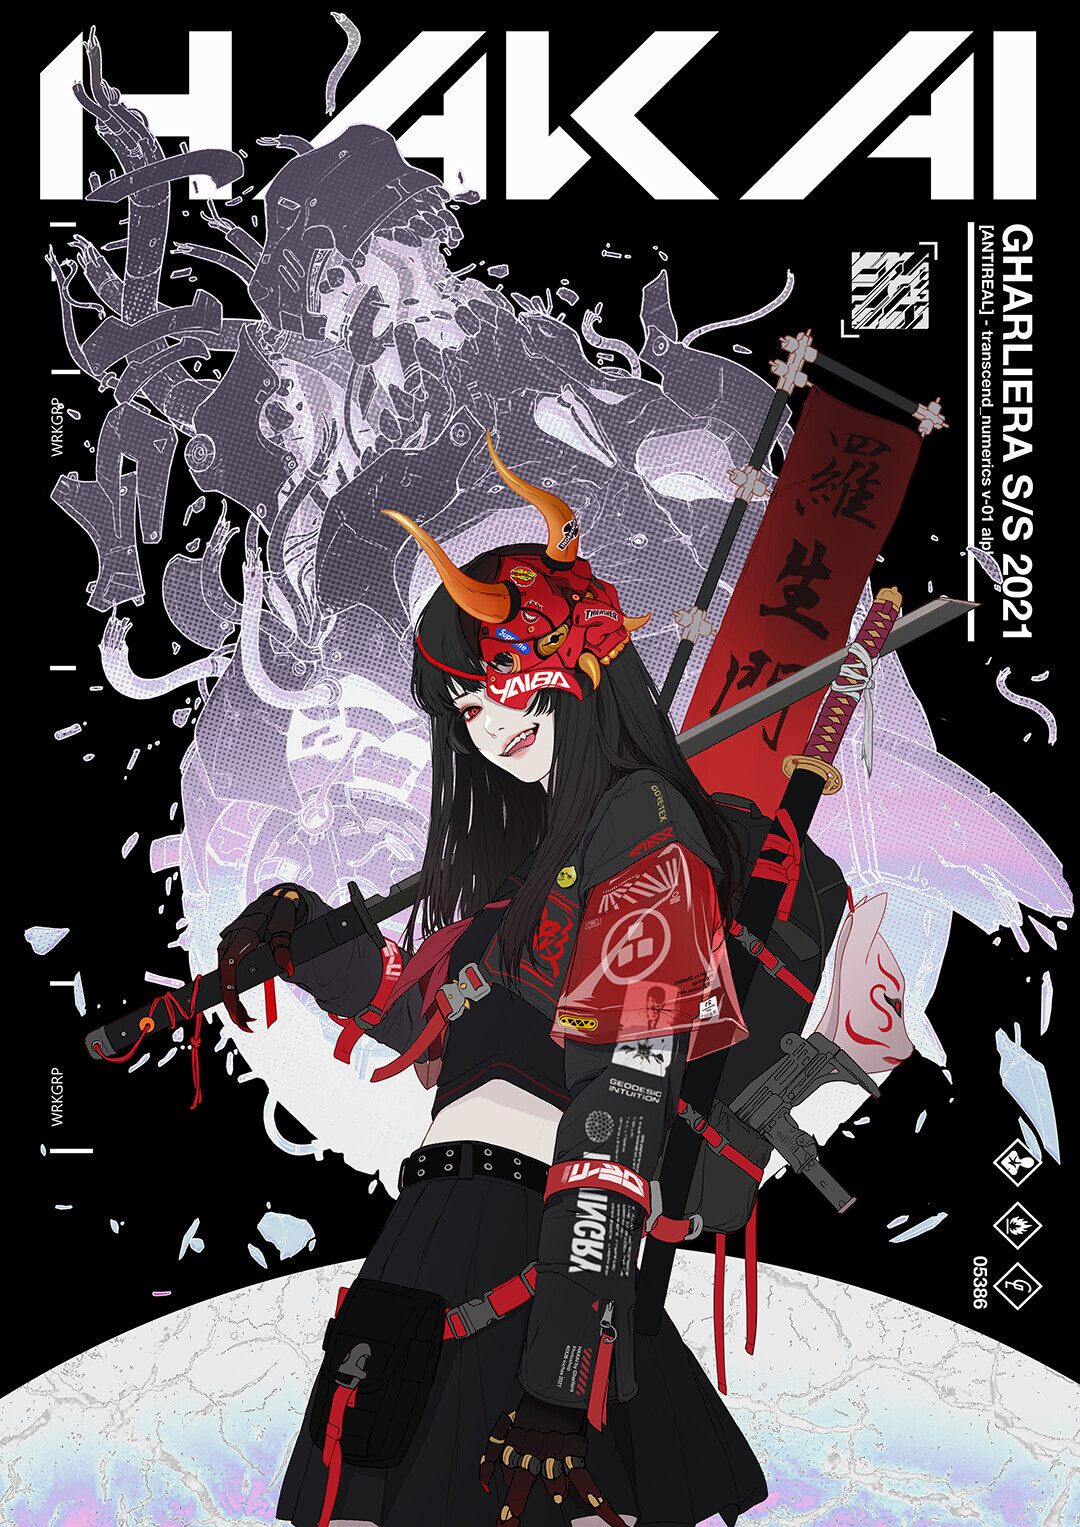 Demon Katana Anime Anime Girls Horns Mask Black Hair Long Hair Women With Swords Sword Weapon Girl W 1080x1527